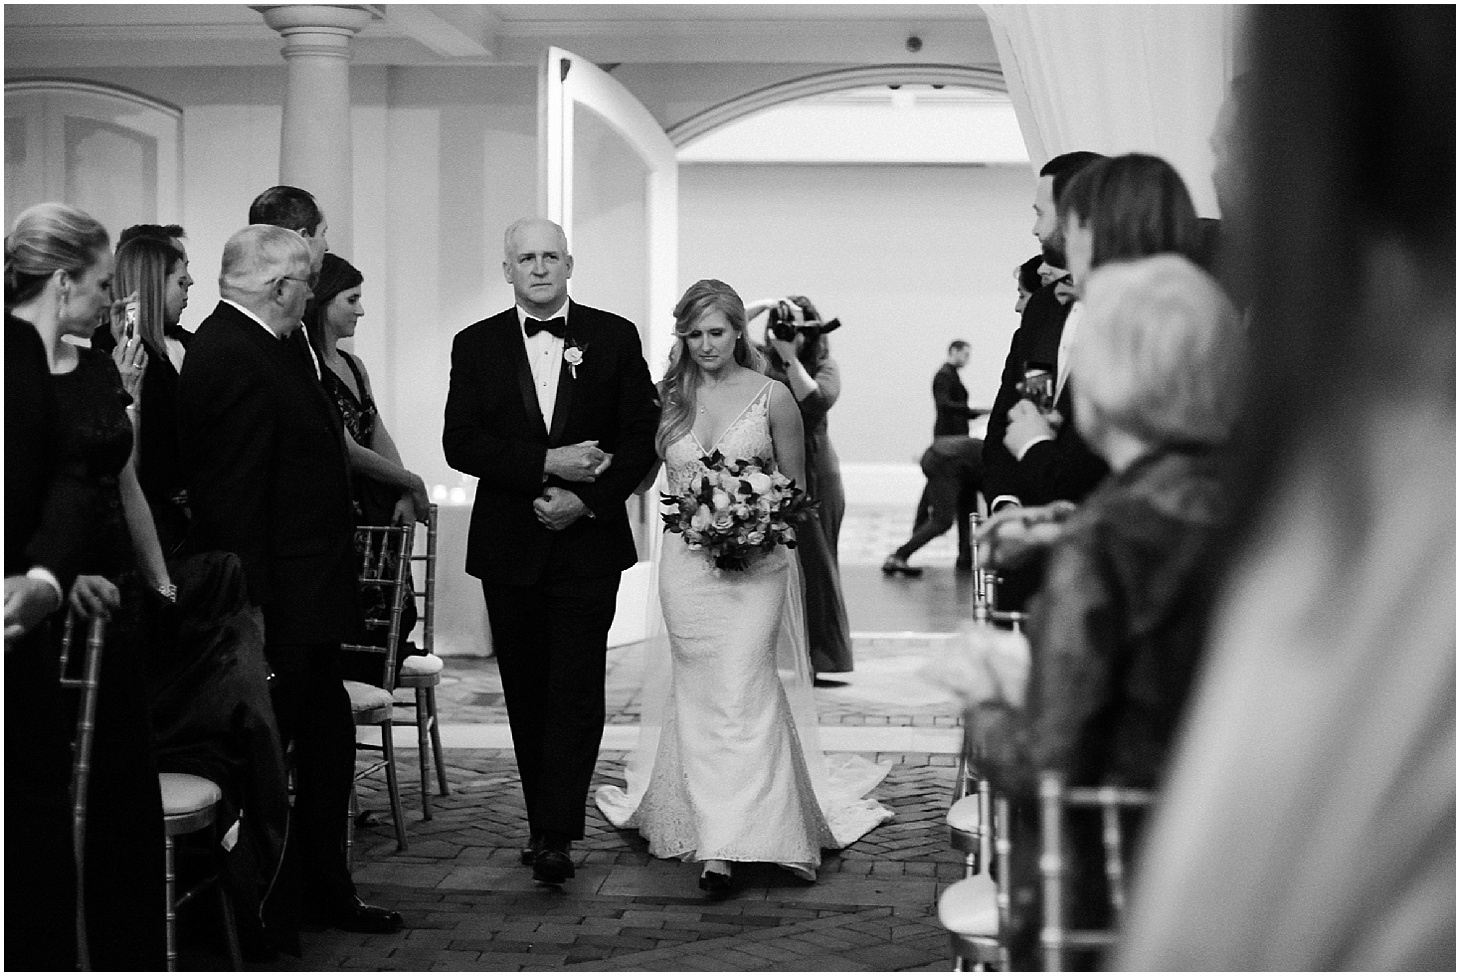 Wedding Ceremony at the Decatur House | French-Inspired New Years Eve Wedding in Washington, DC | Sarah Bradshaw Photography | Washington DC Wedding Photographer